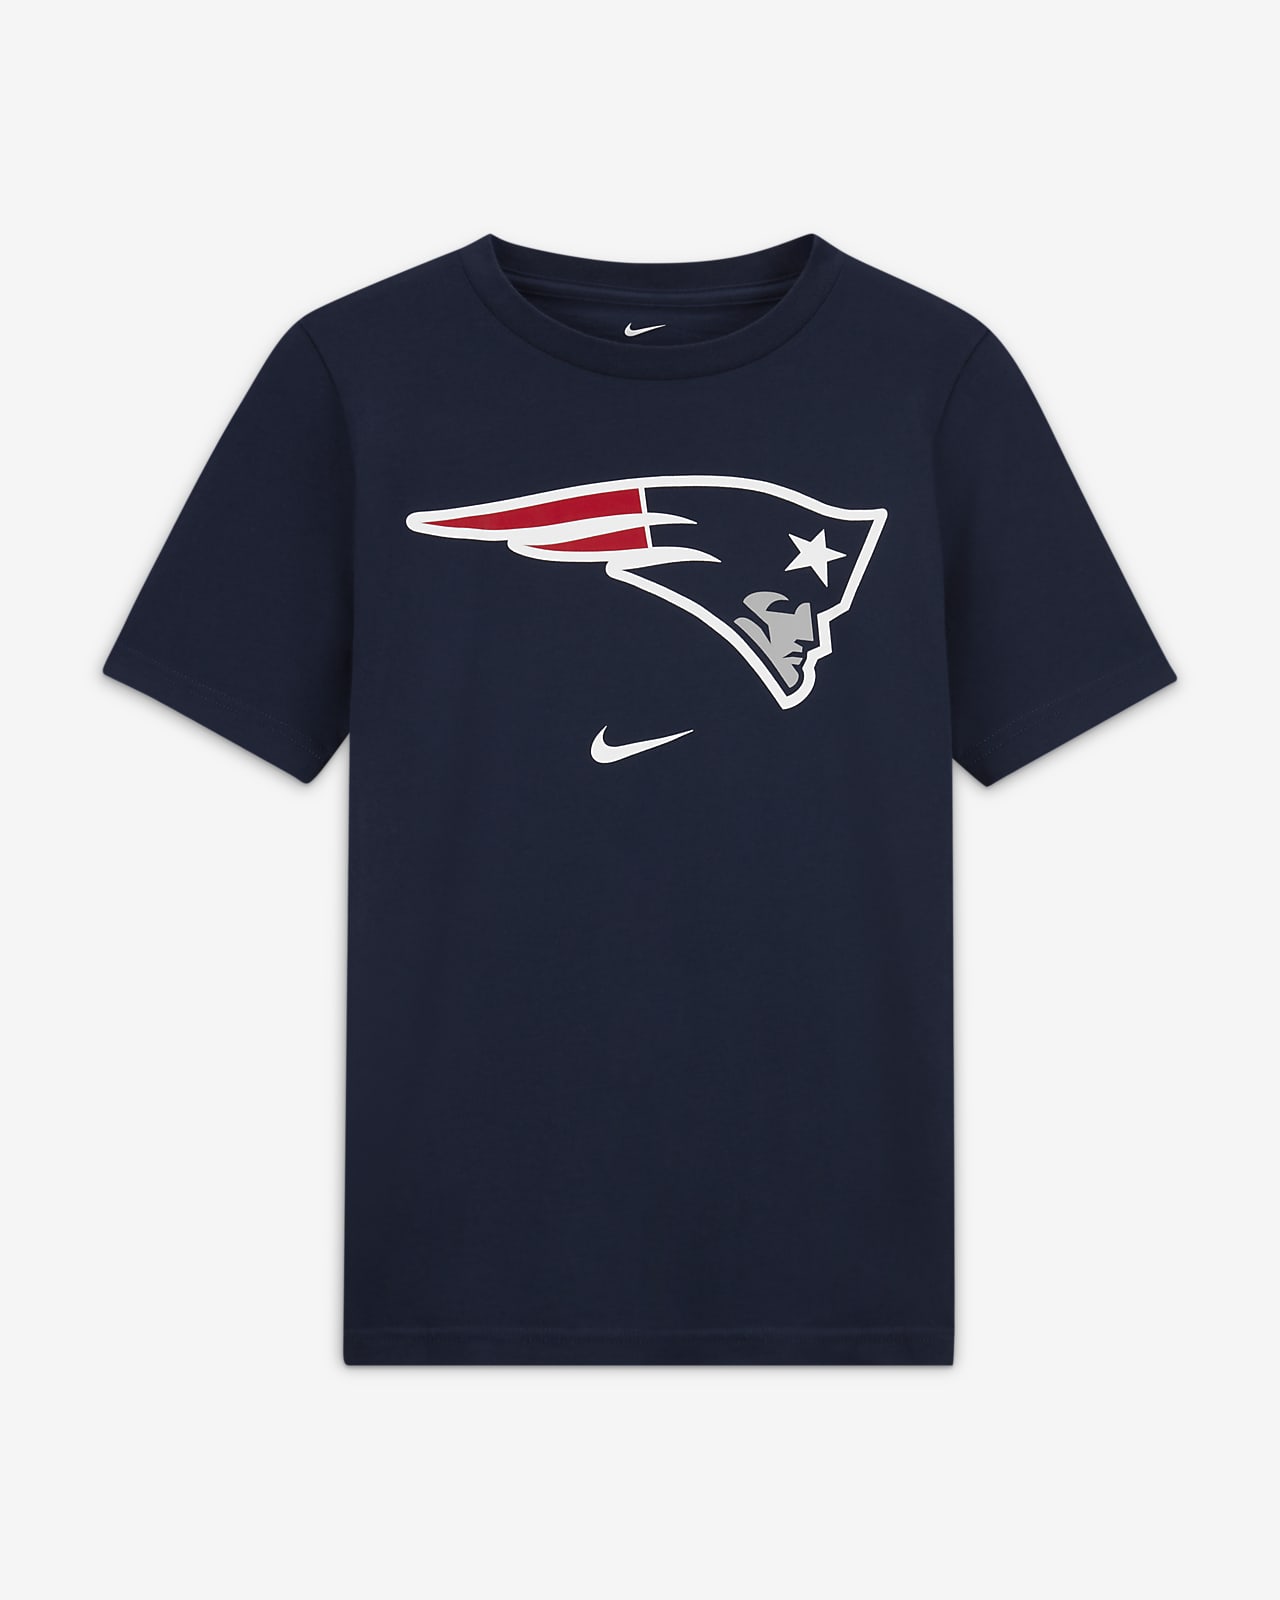 Nike (NFL New England Patriots) T-shirt voor kids